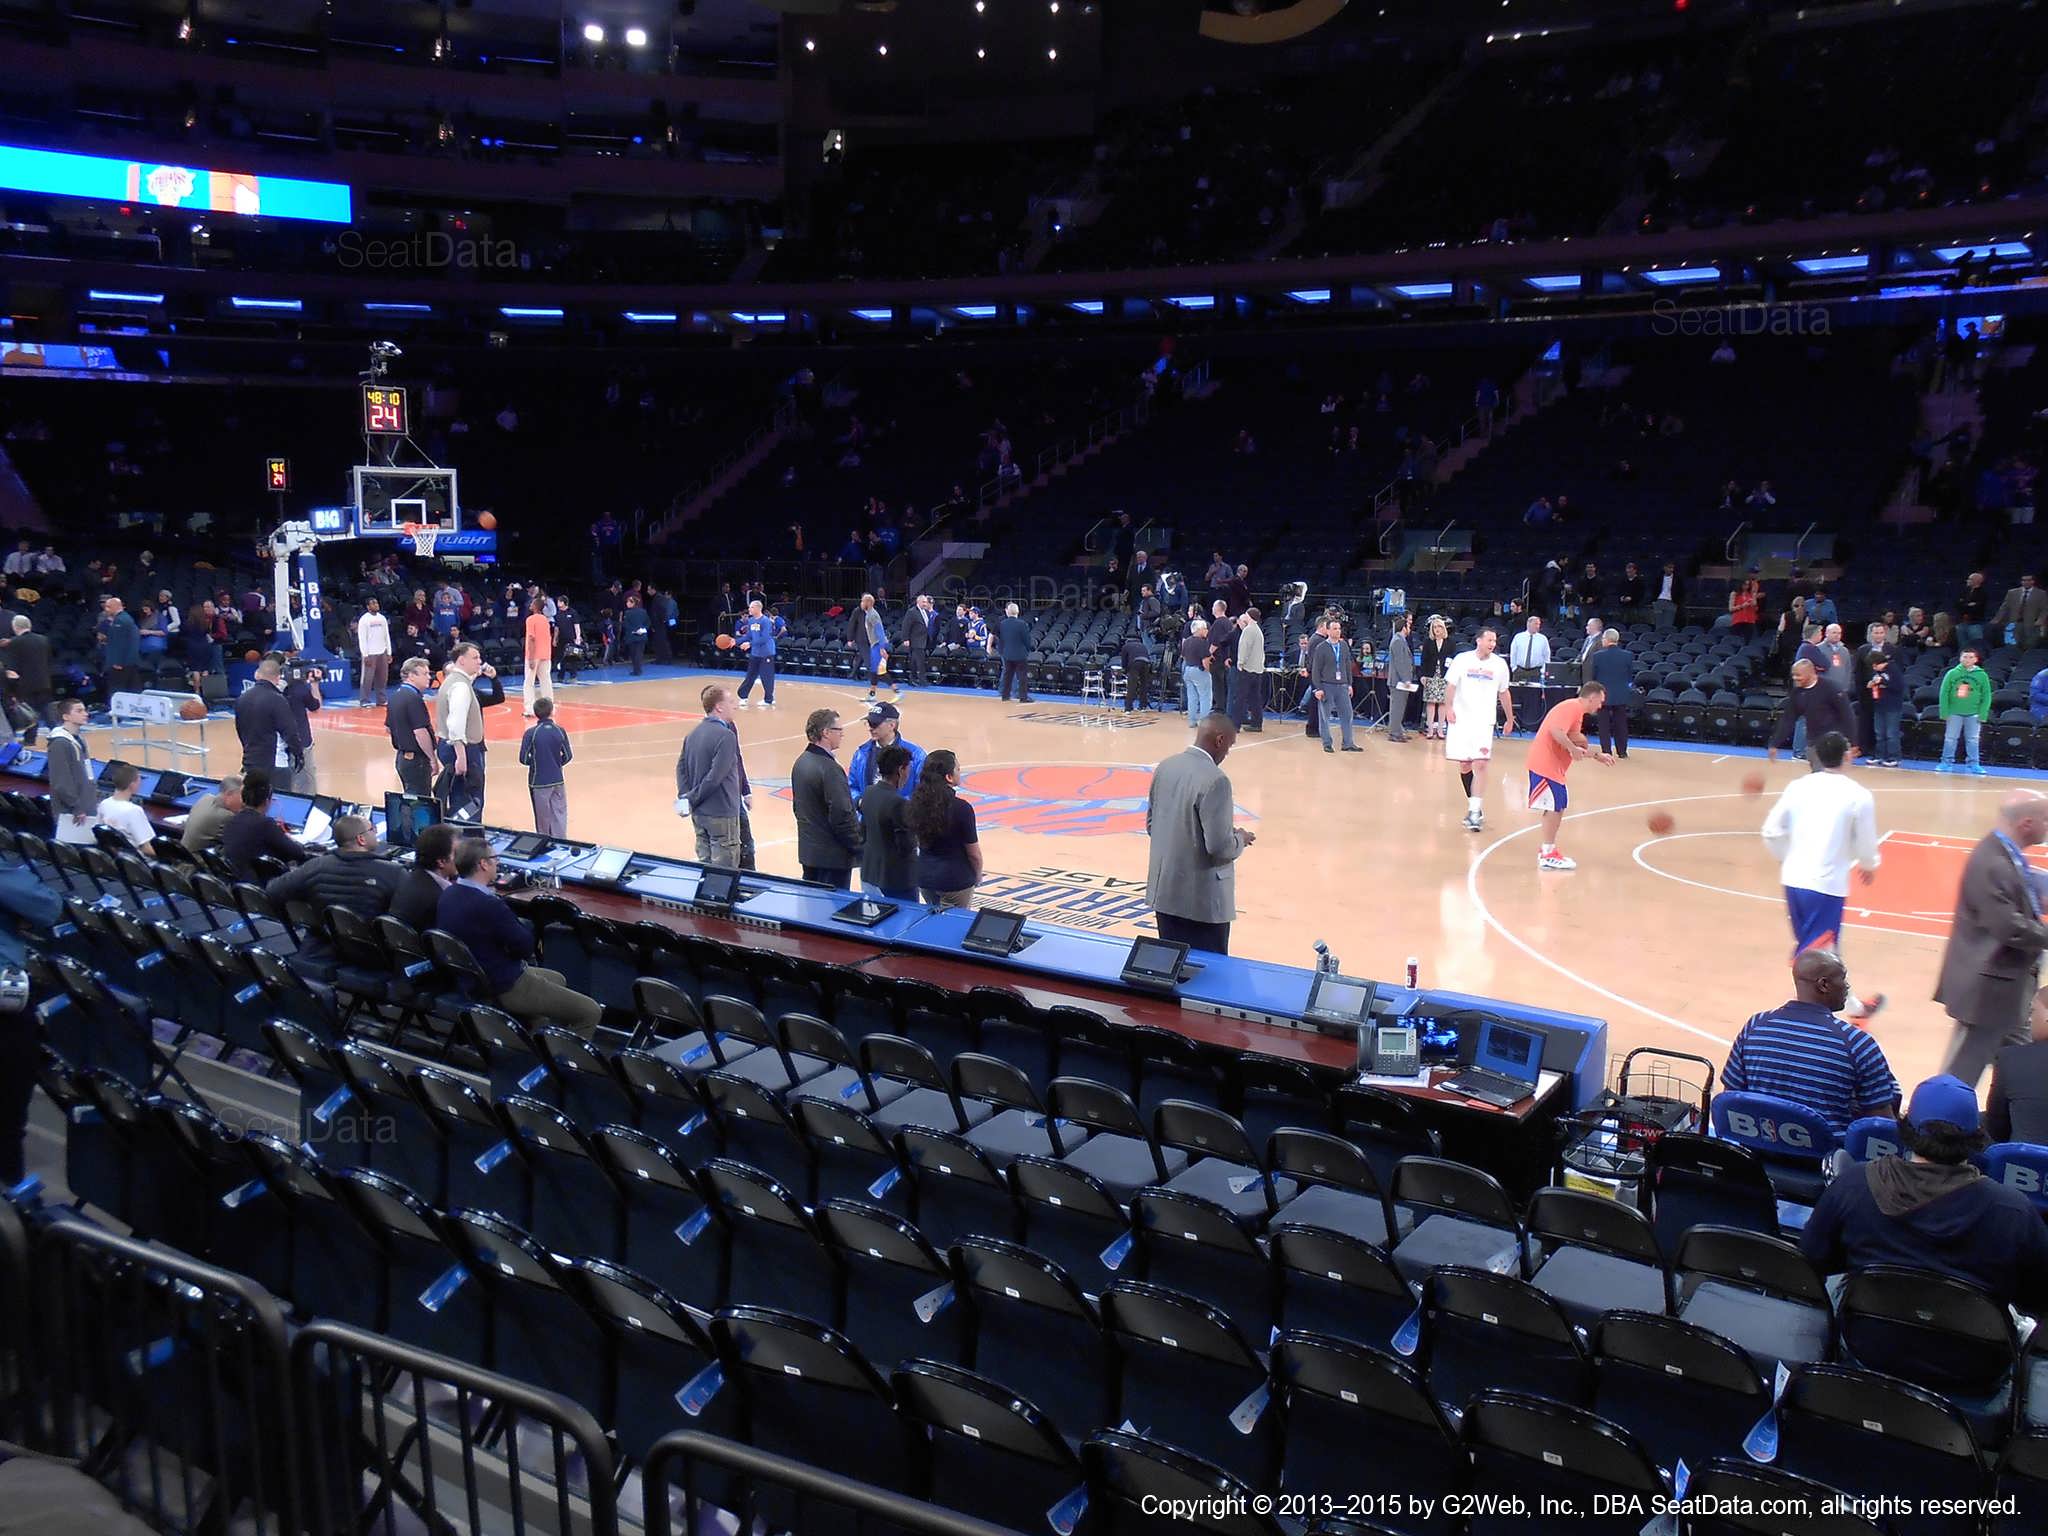 Square Garden New York Knicks Seating Chart